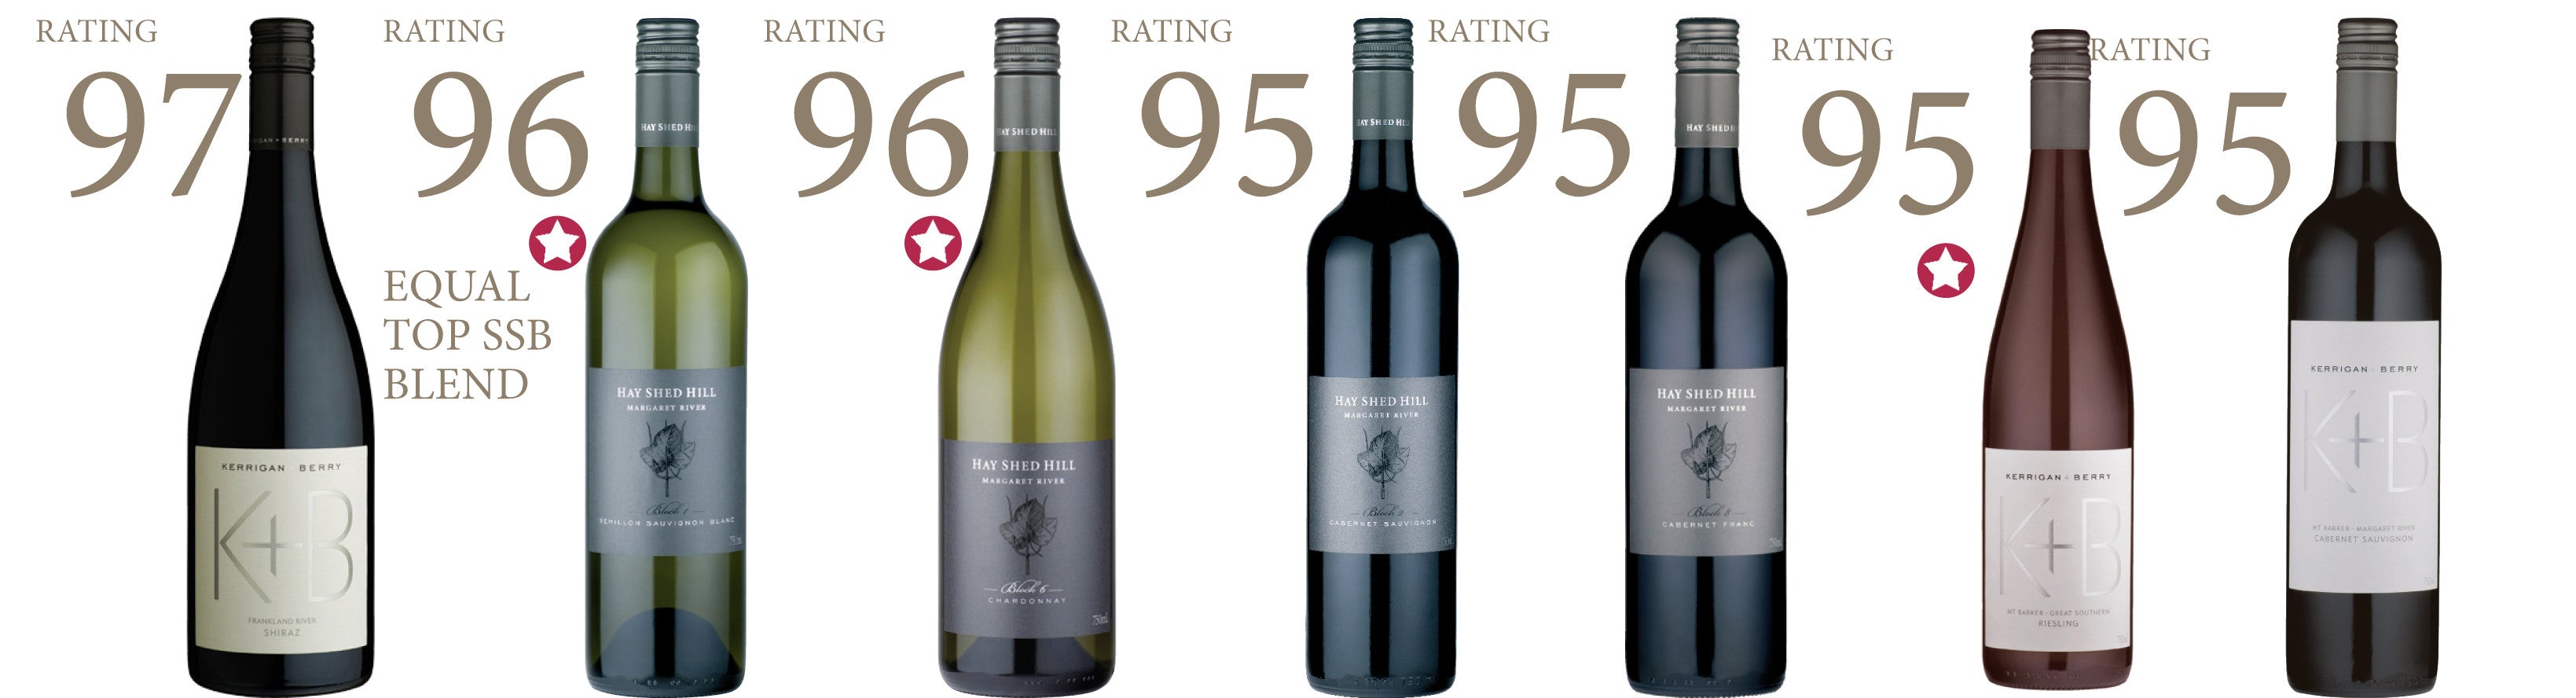 Wine Companion 2017 - 5 Star Winery Rating